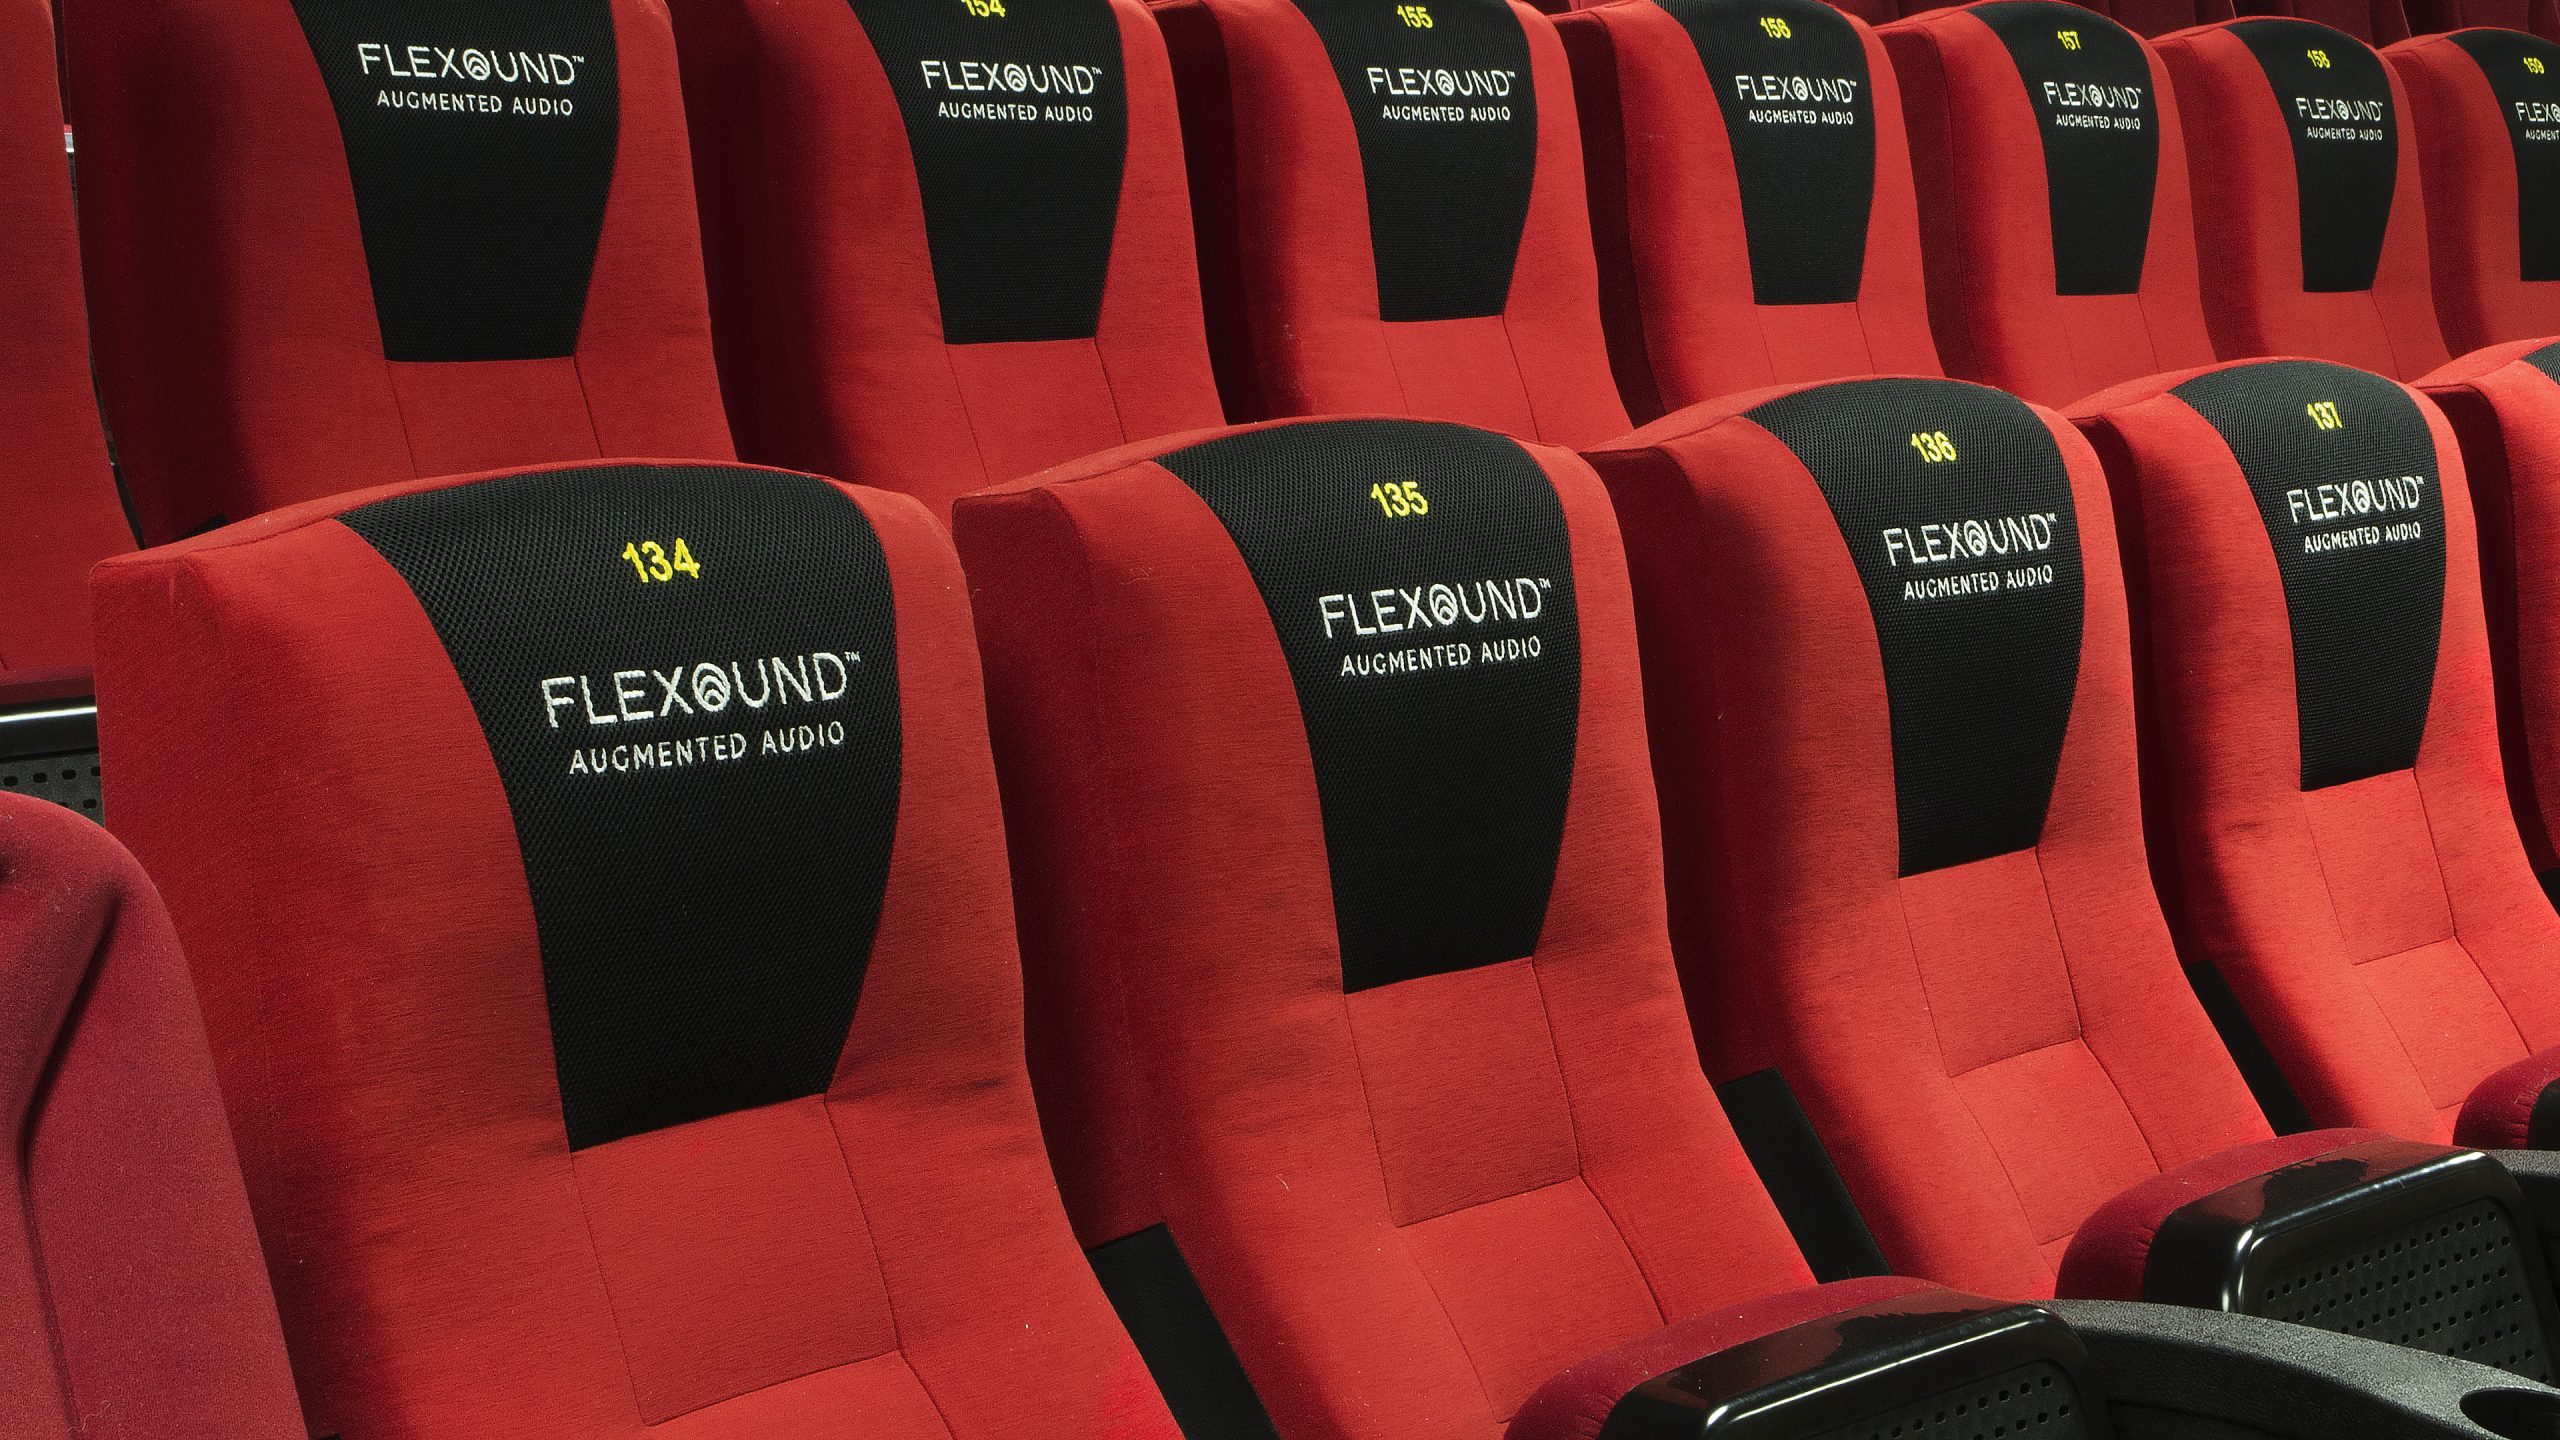 flexound-augmented-audio-cinema-seats